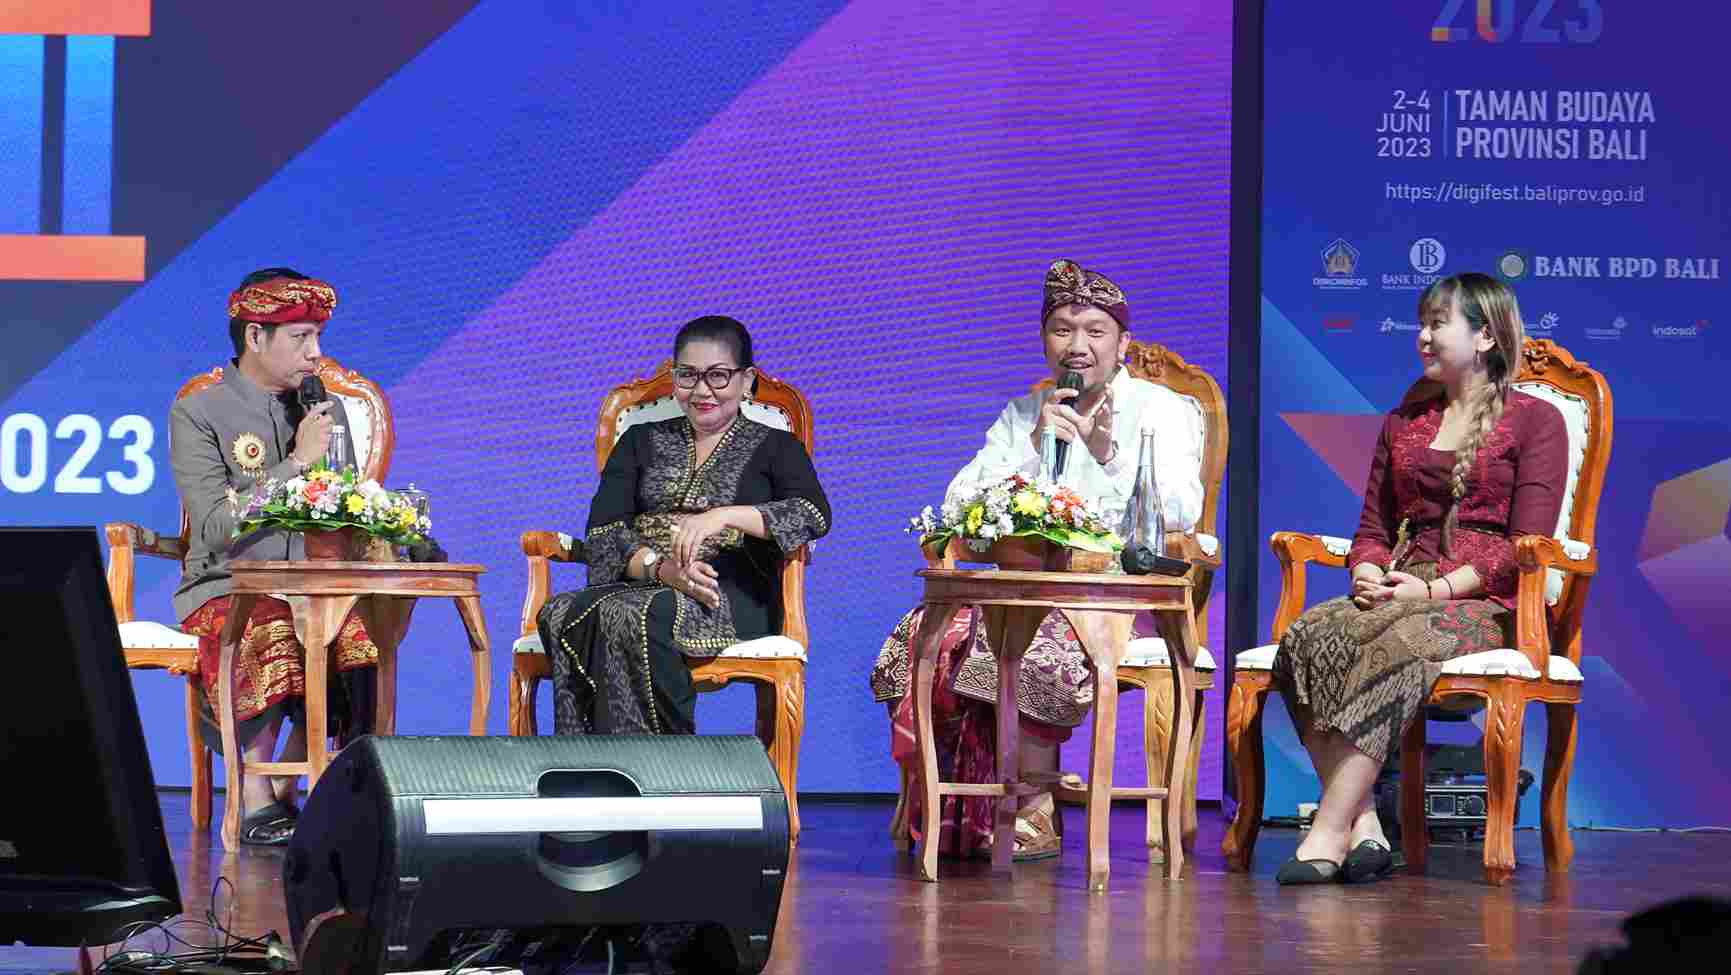 Founder MAJA Labs Adrian Zakhary Ungkap Ingin Jadikan Bali Sebagai Pusat Digital Fashion Asia